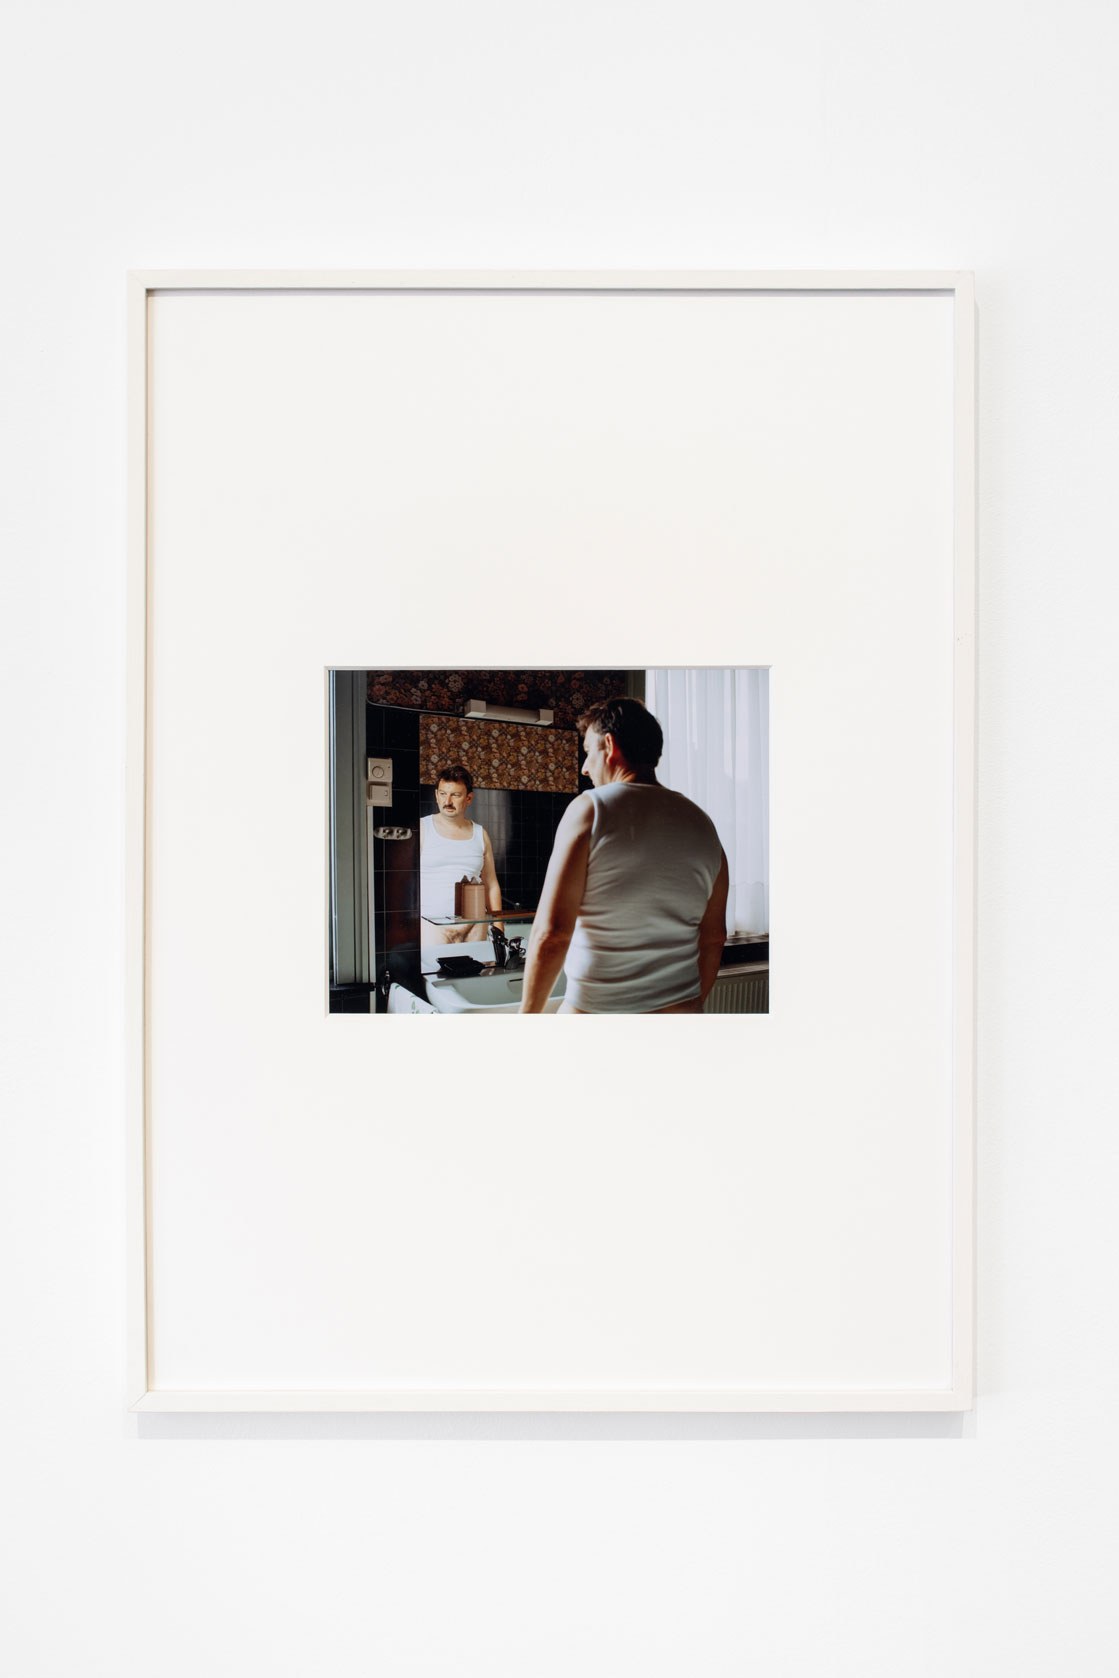 Alain Guiraudie Homme au miroir, 2018 19,11 × 24 cm, Lambda print Courtesy of the artist and Crèvecoeur. Photography: Martin Argyroglo.